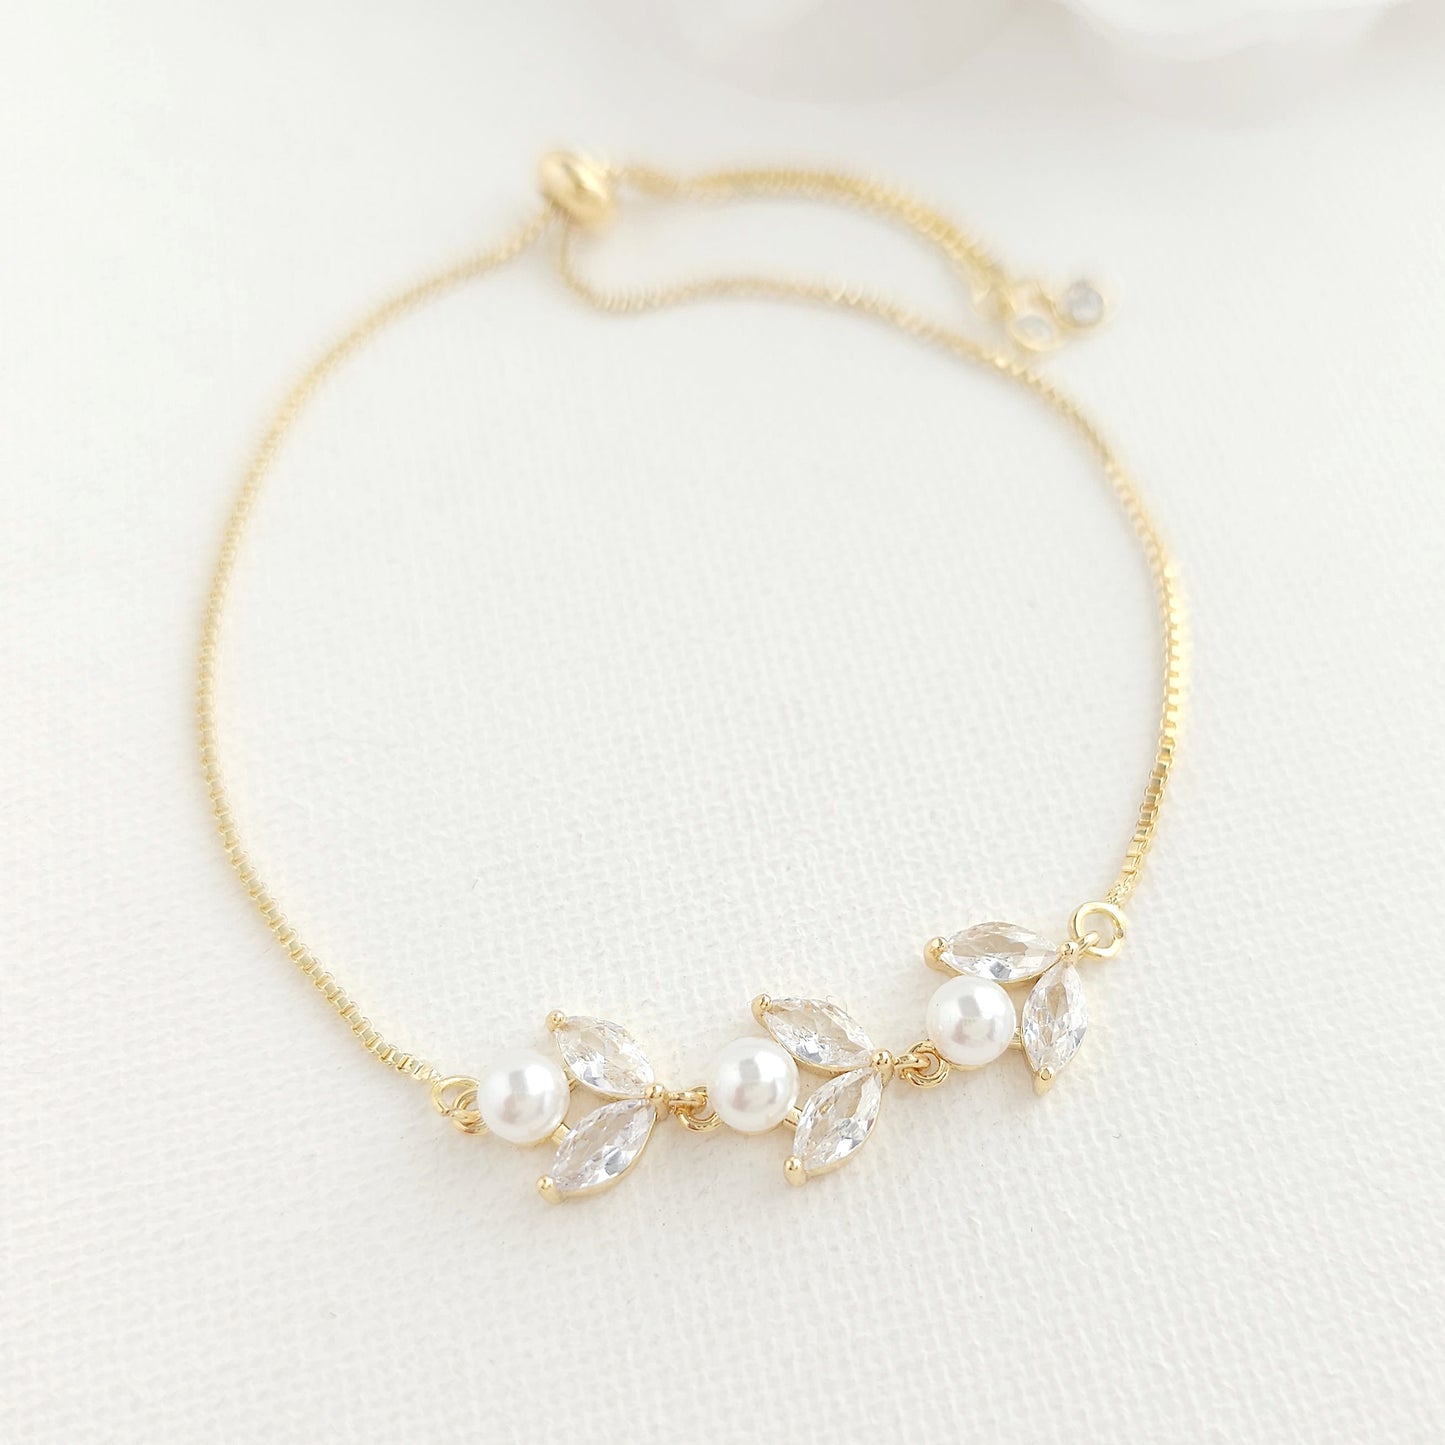 Sliding Gold Bracelet With Pearls-Leila